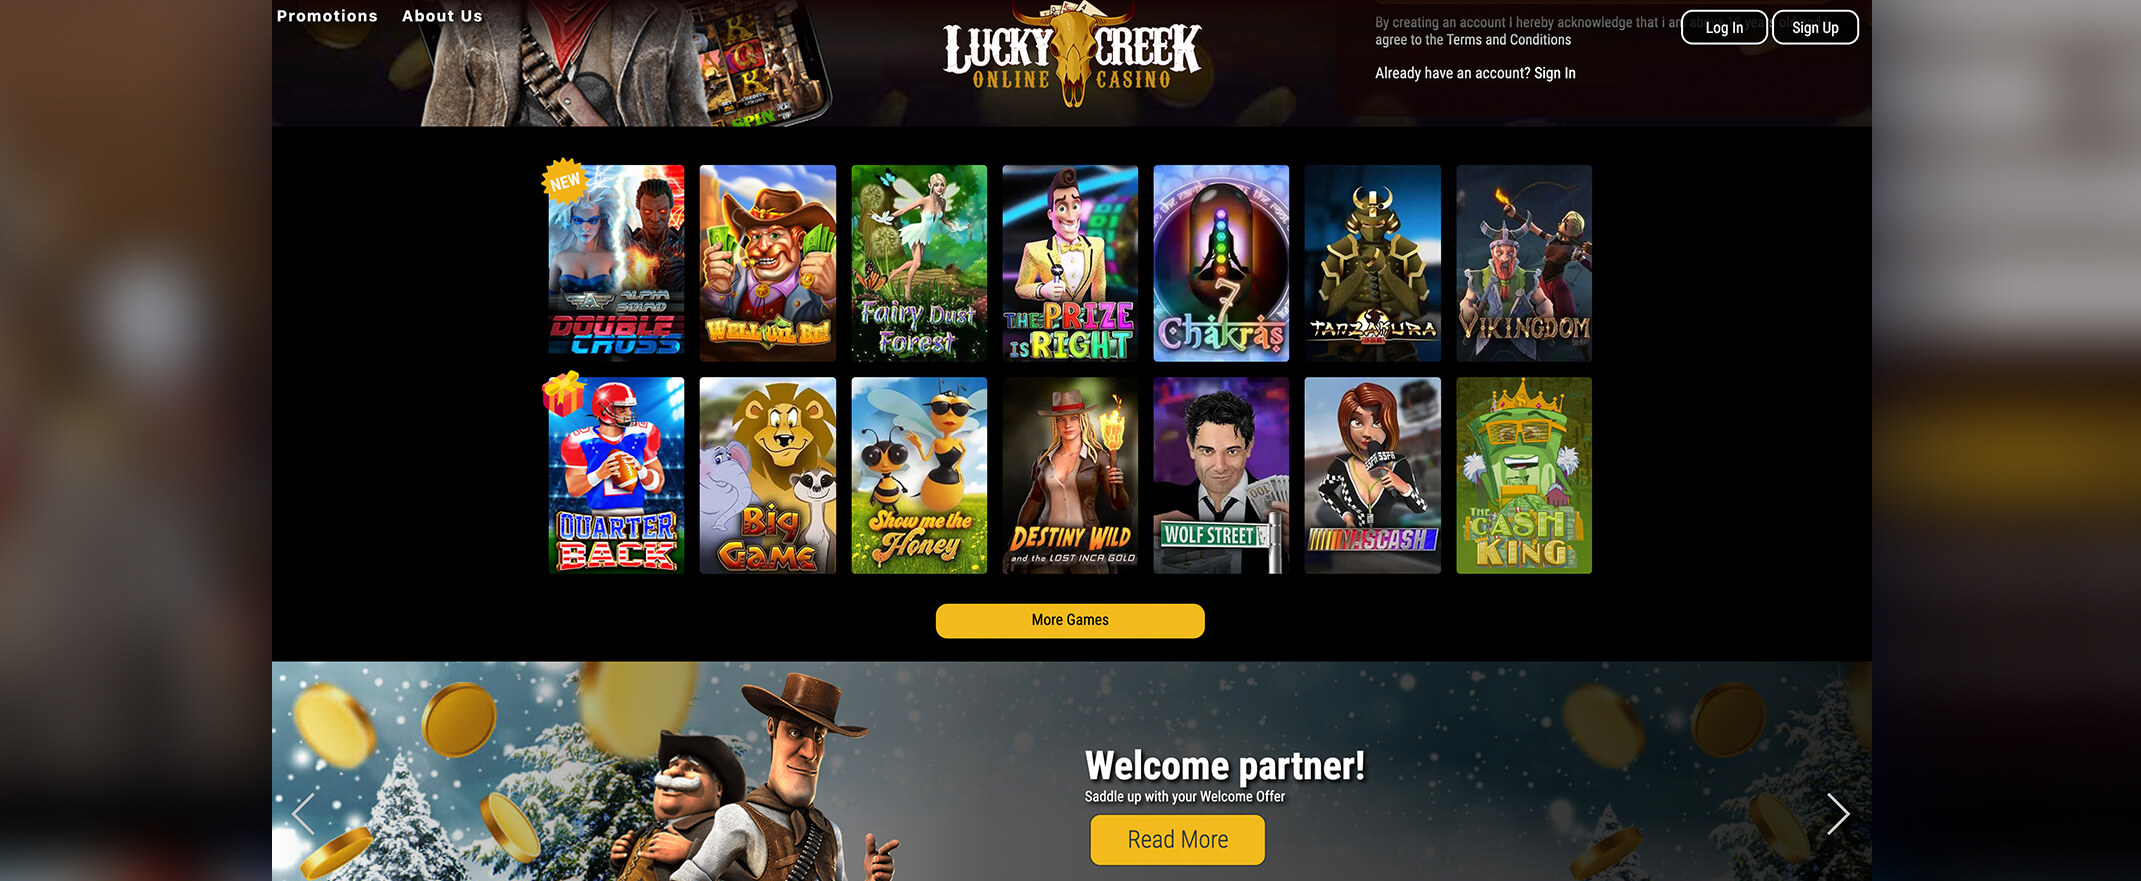 Lucky Creek screenshot of the games